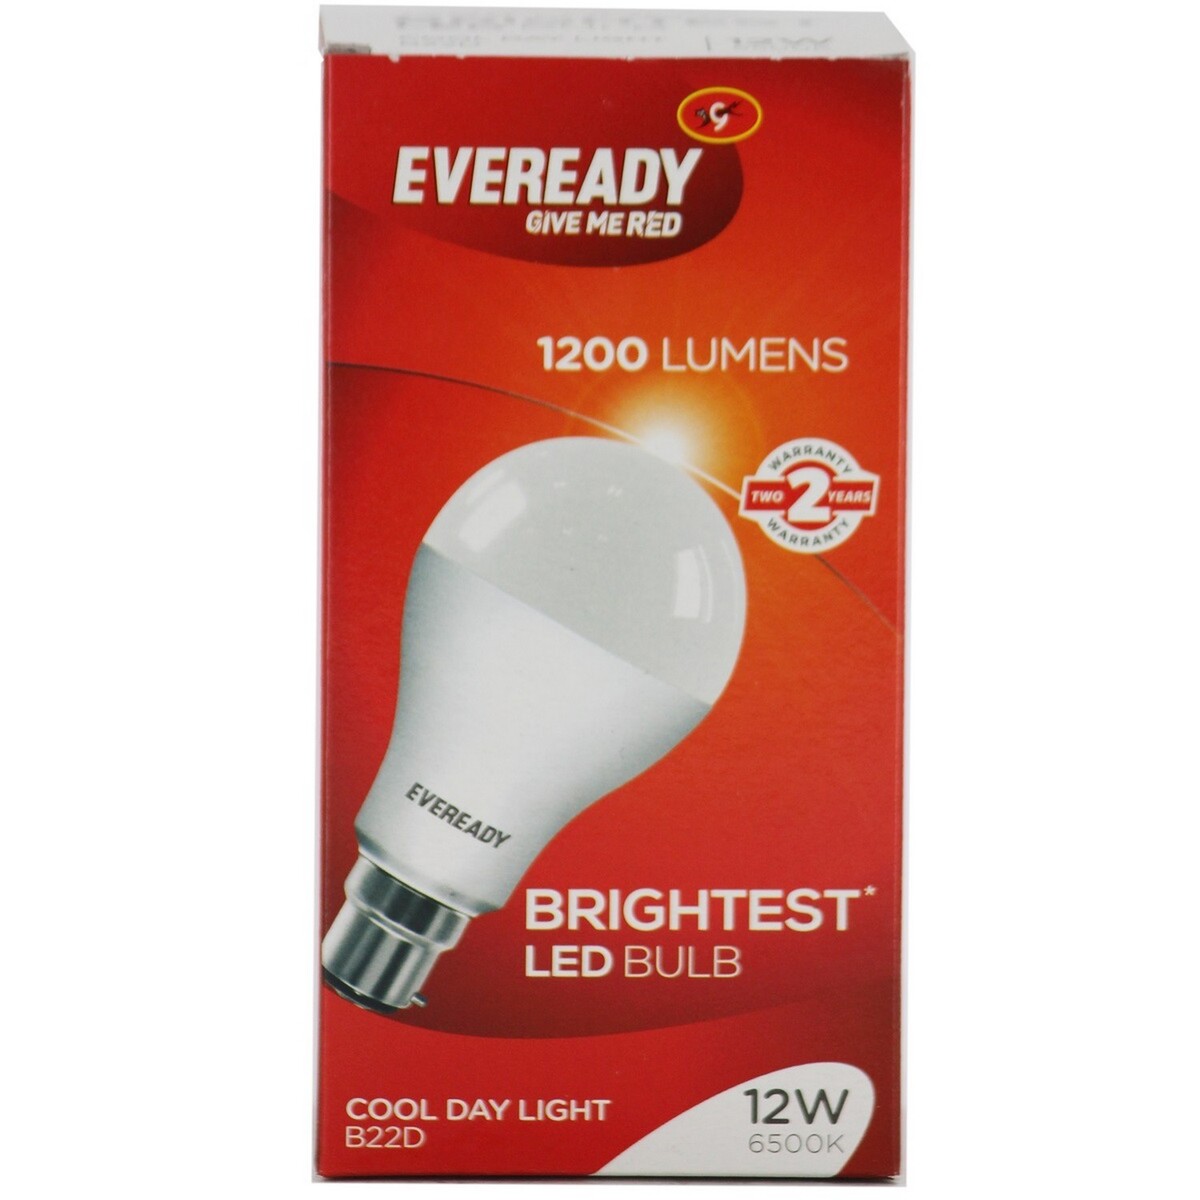 Eveready LED Bulb 12W B22